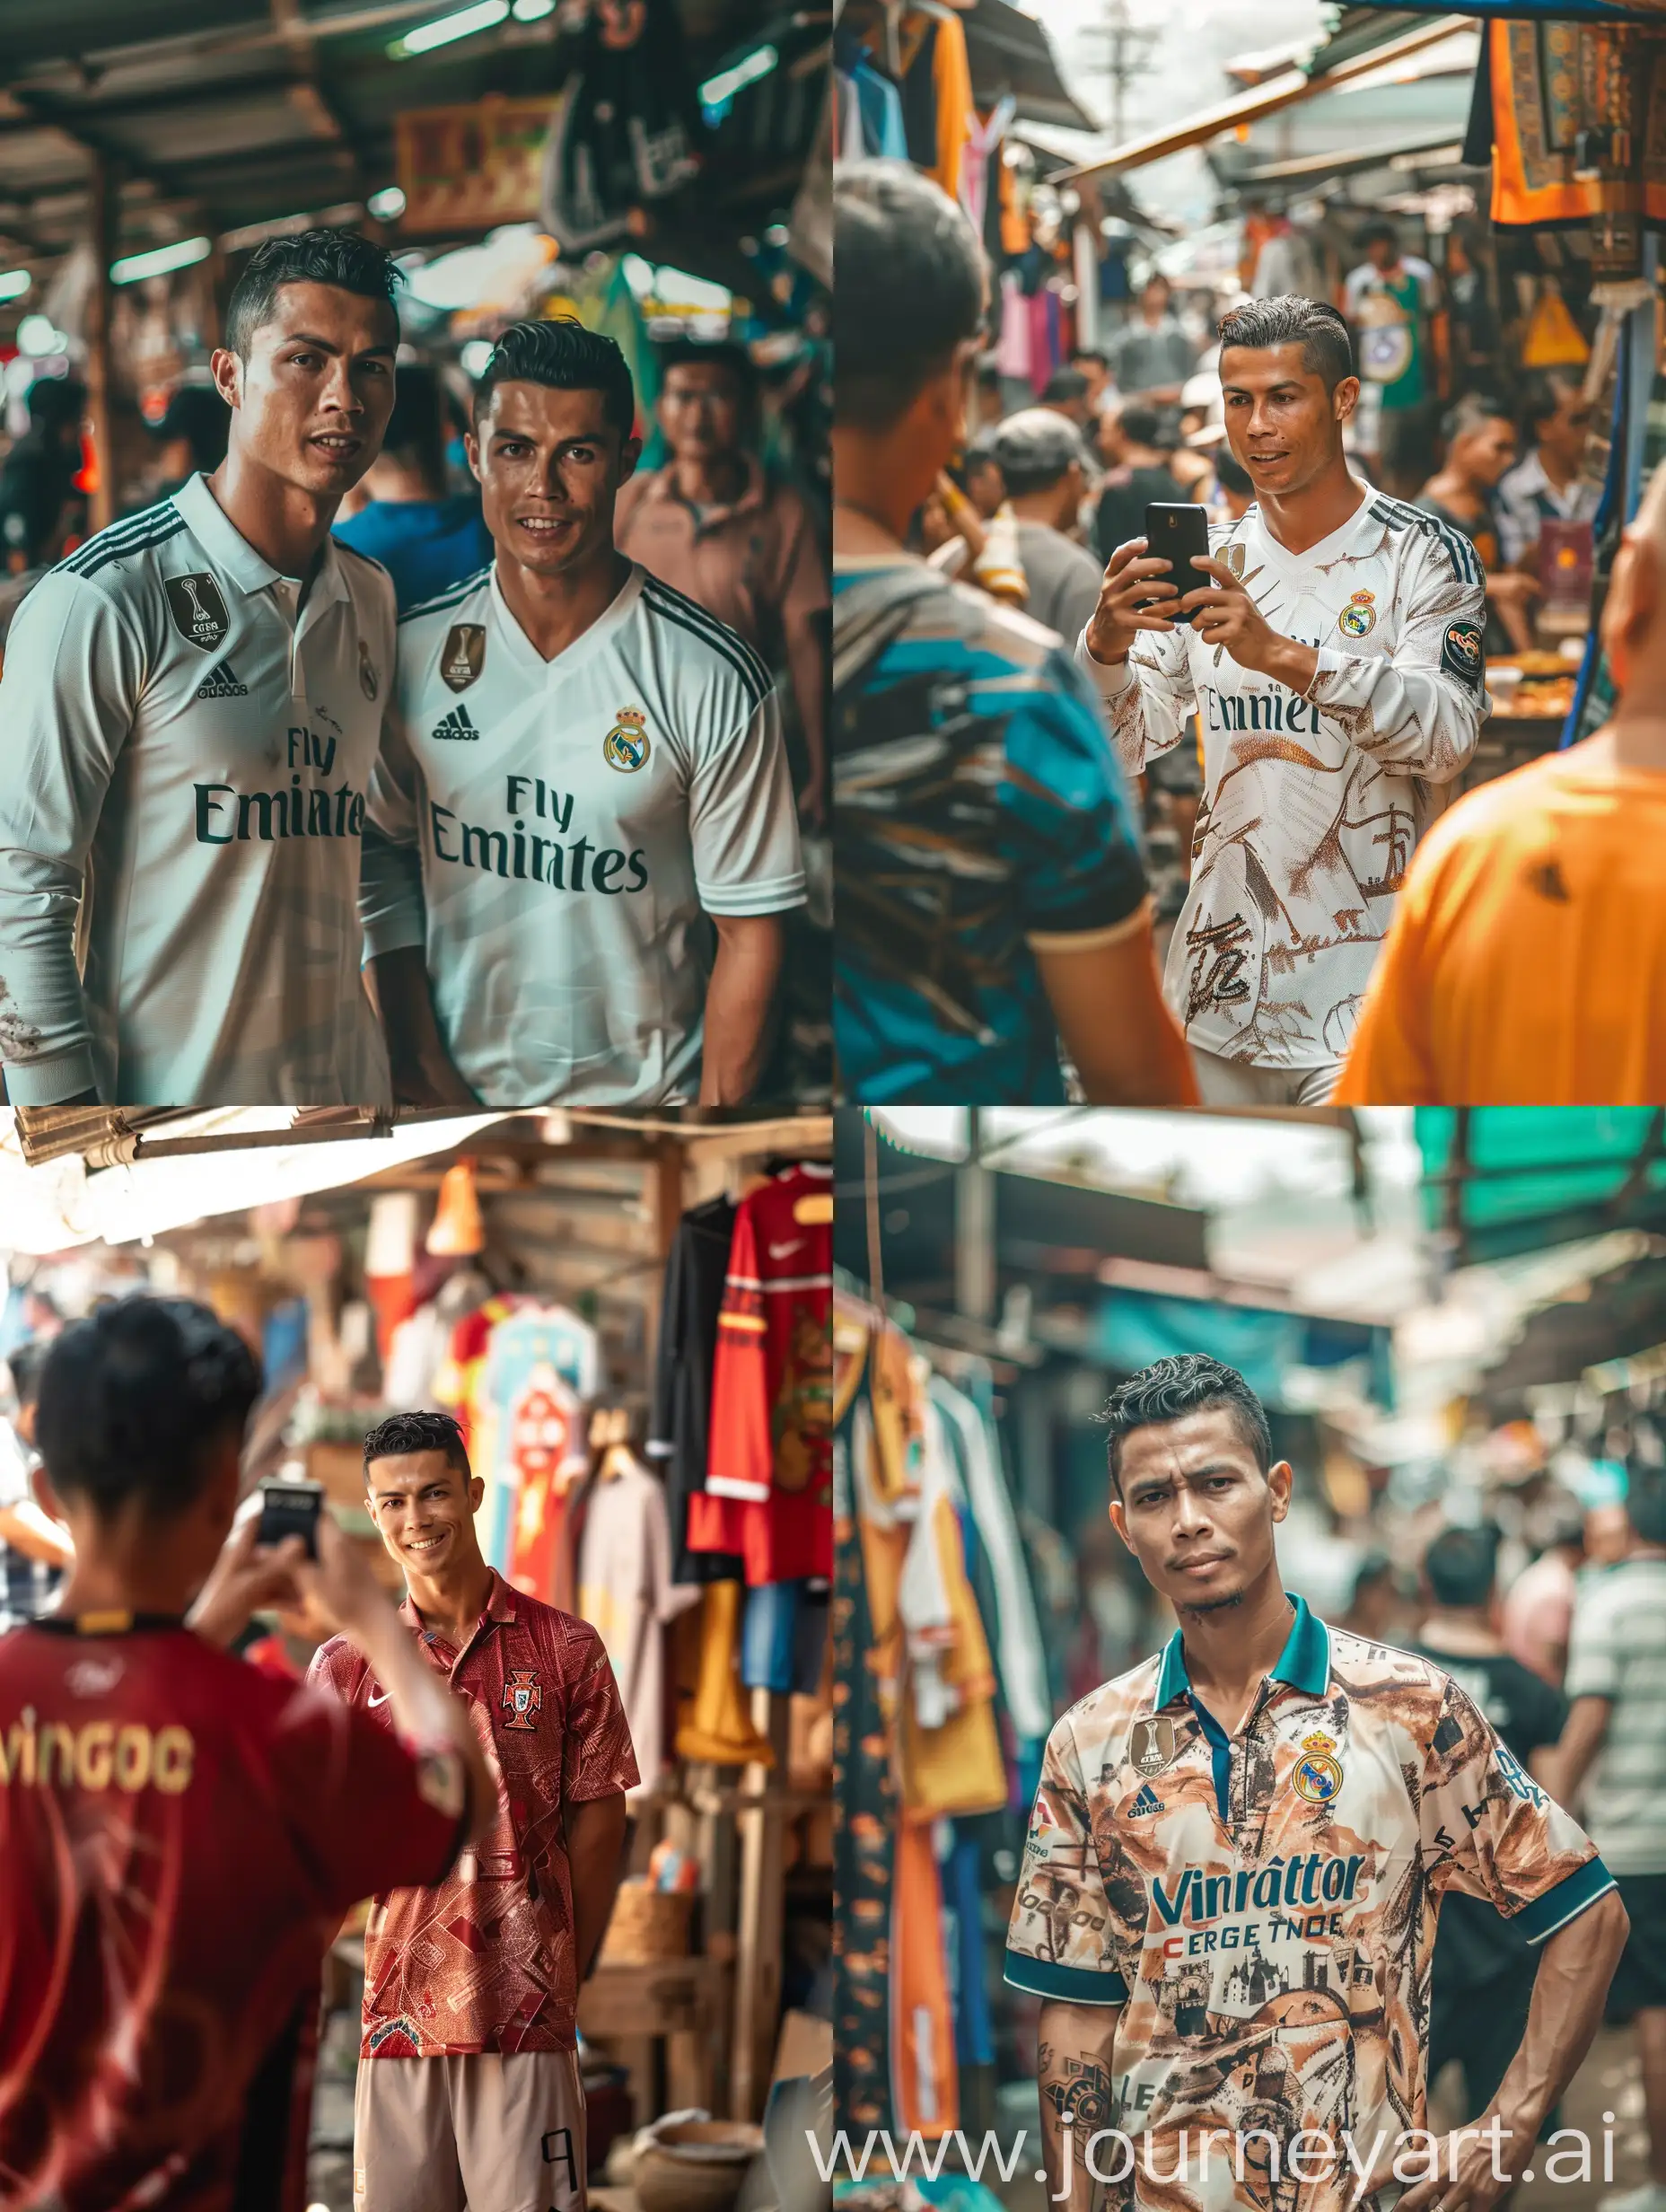 Indonesian-Man-in-Virgo-Creative-Shirt-with-Cristiano-Ronaldo-at-Traditional-Market